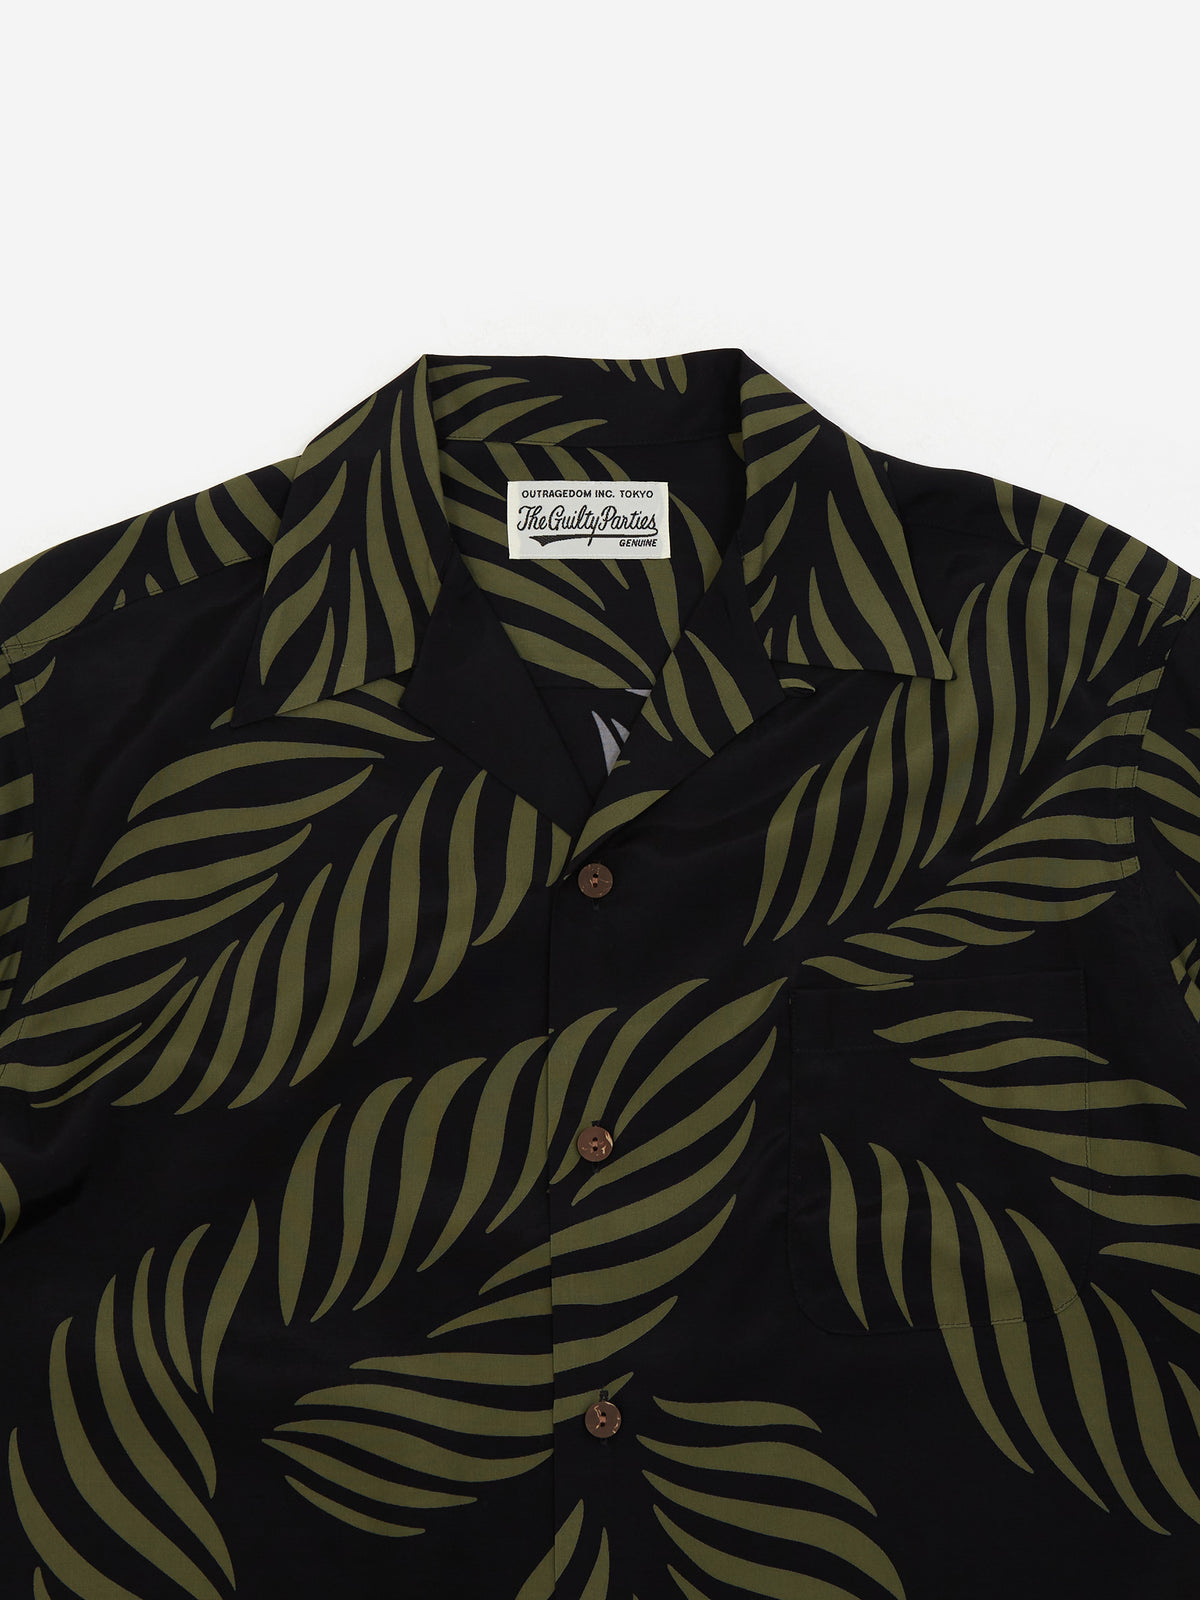 We carry an excellent range of Wacko Maria Hawaiian Shirt S/S